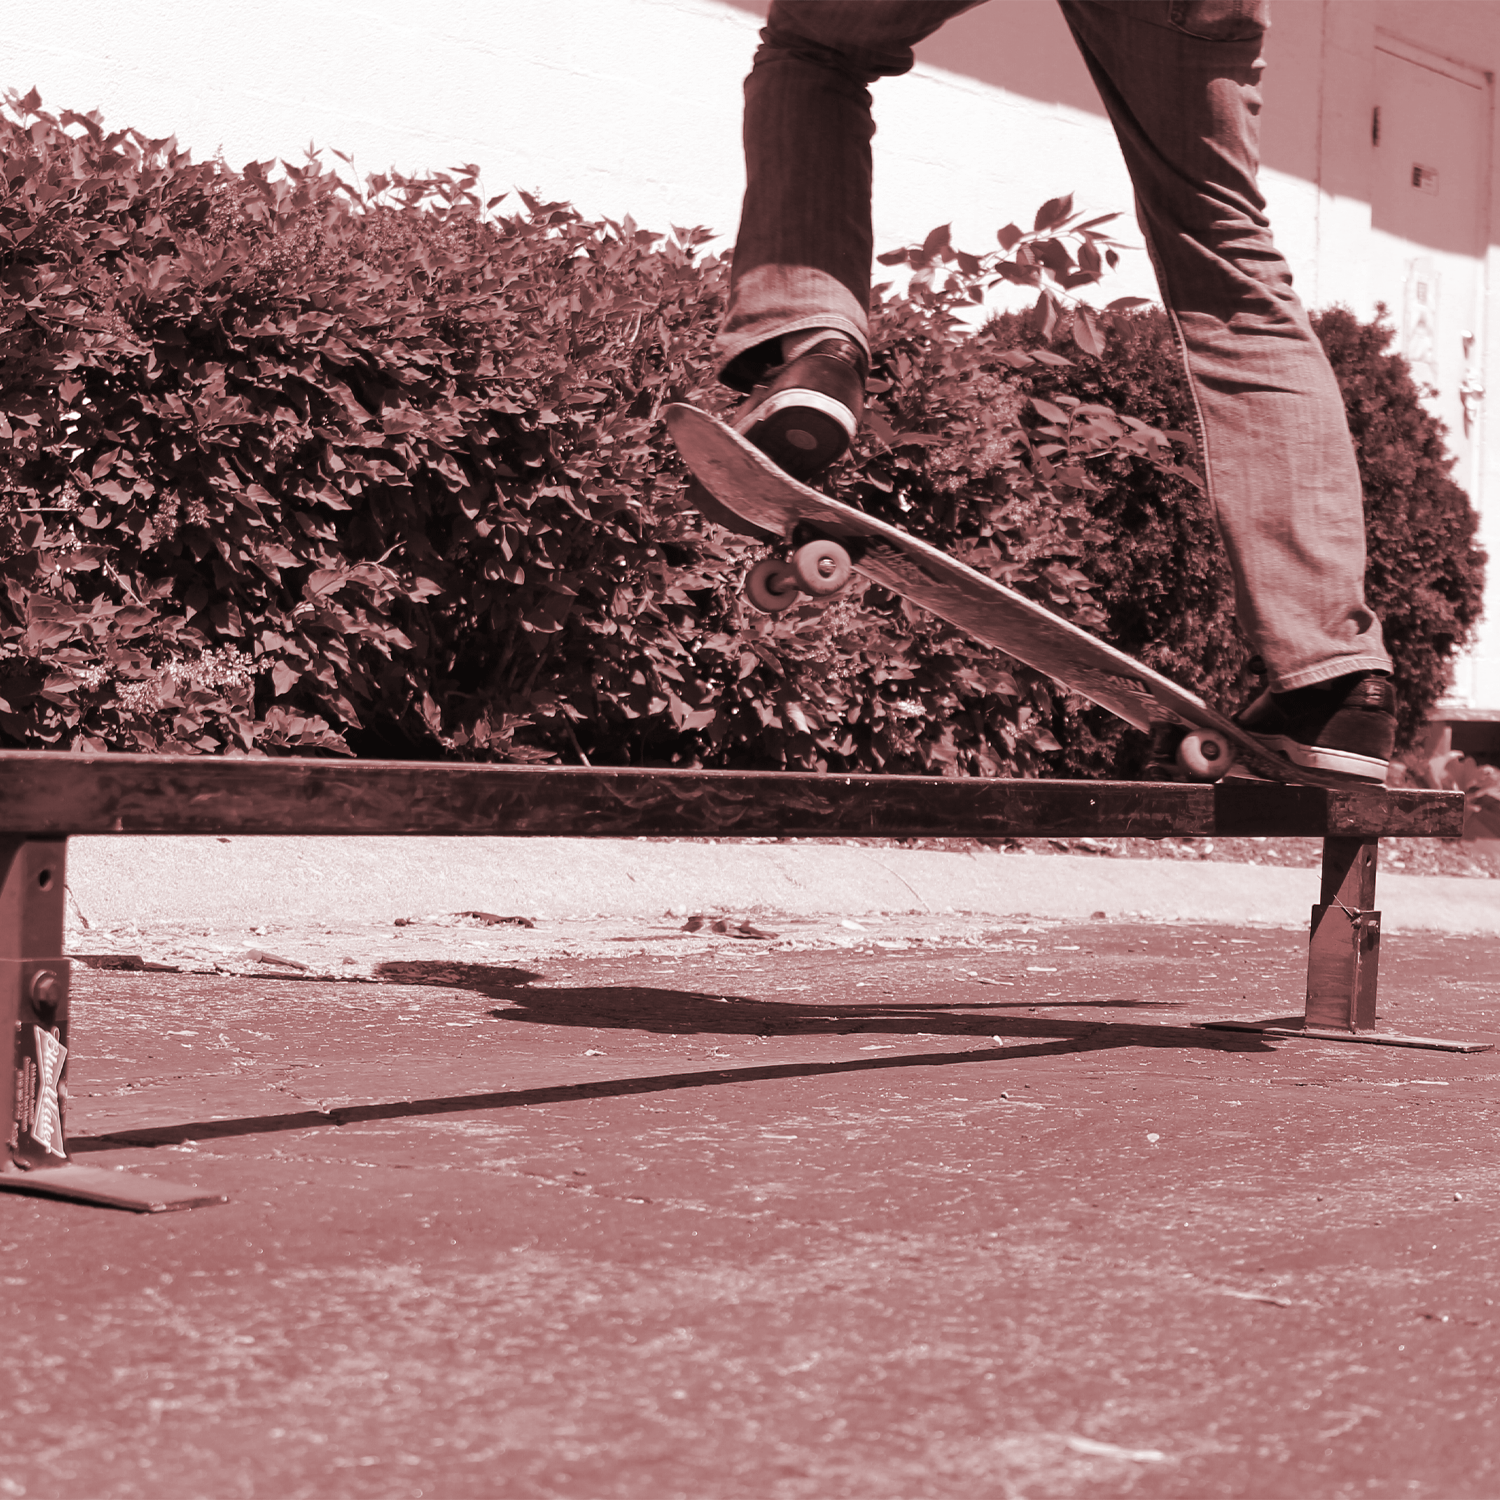 Grinding a rail with bullseye skateboard bearings